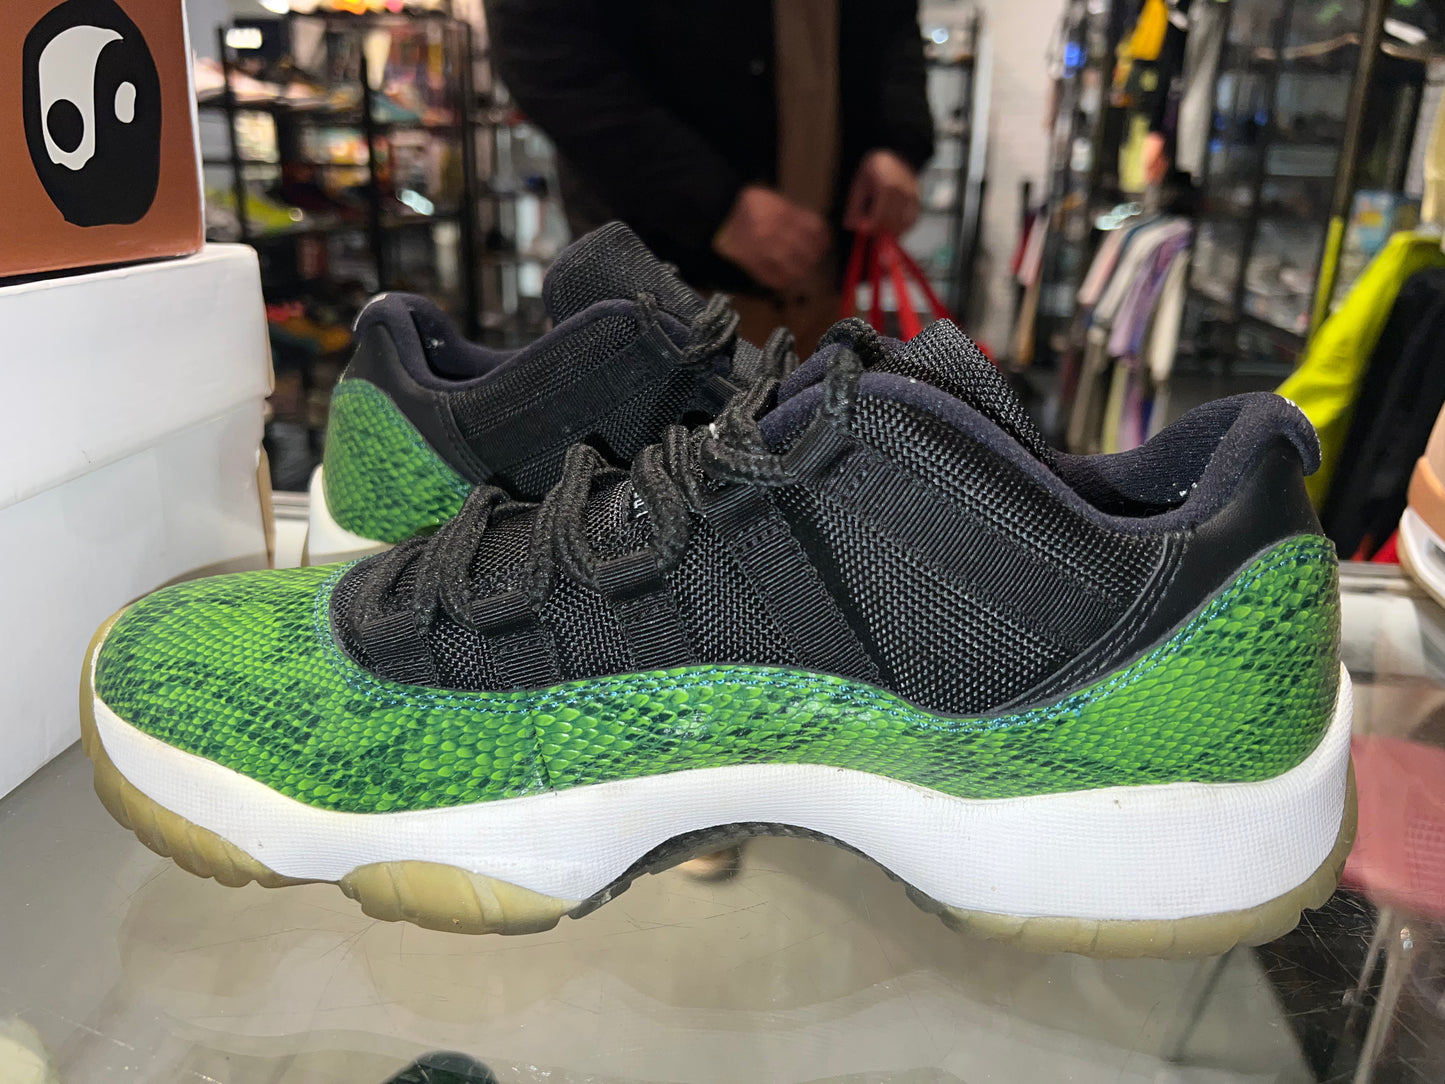 Size 9 Air Jordan 11 Low “Green Snakeskin” (Mall)